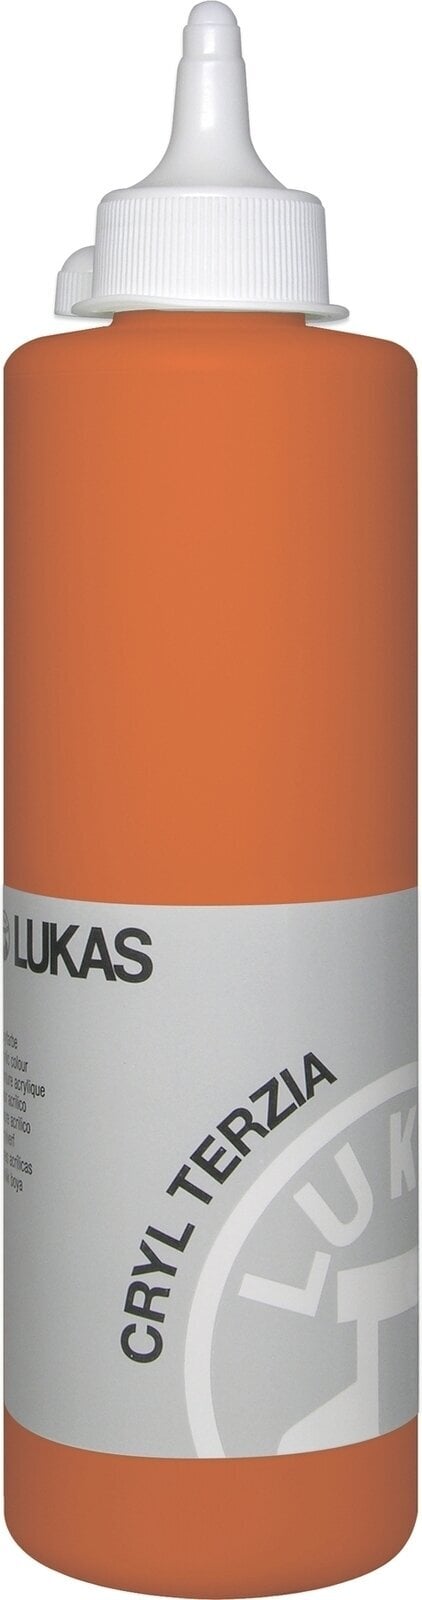 Akrylová farba Lukas Cryl Terzia Acrylic Paint Plastic Bottle Akrylová farba Cadmium Orange Hue 500 ml 1 ks